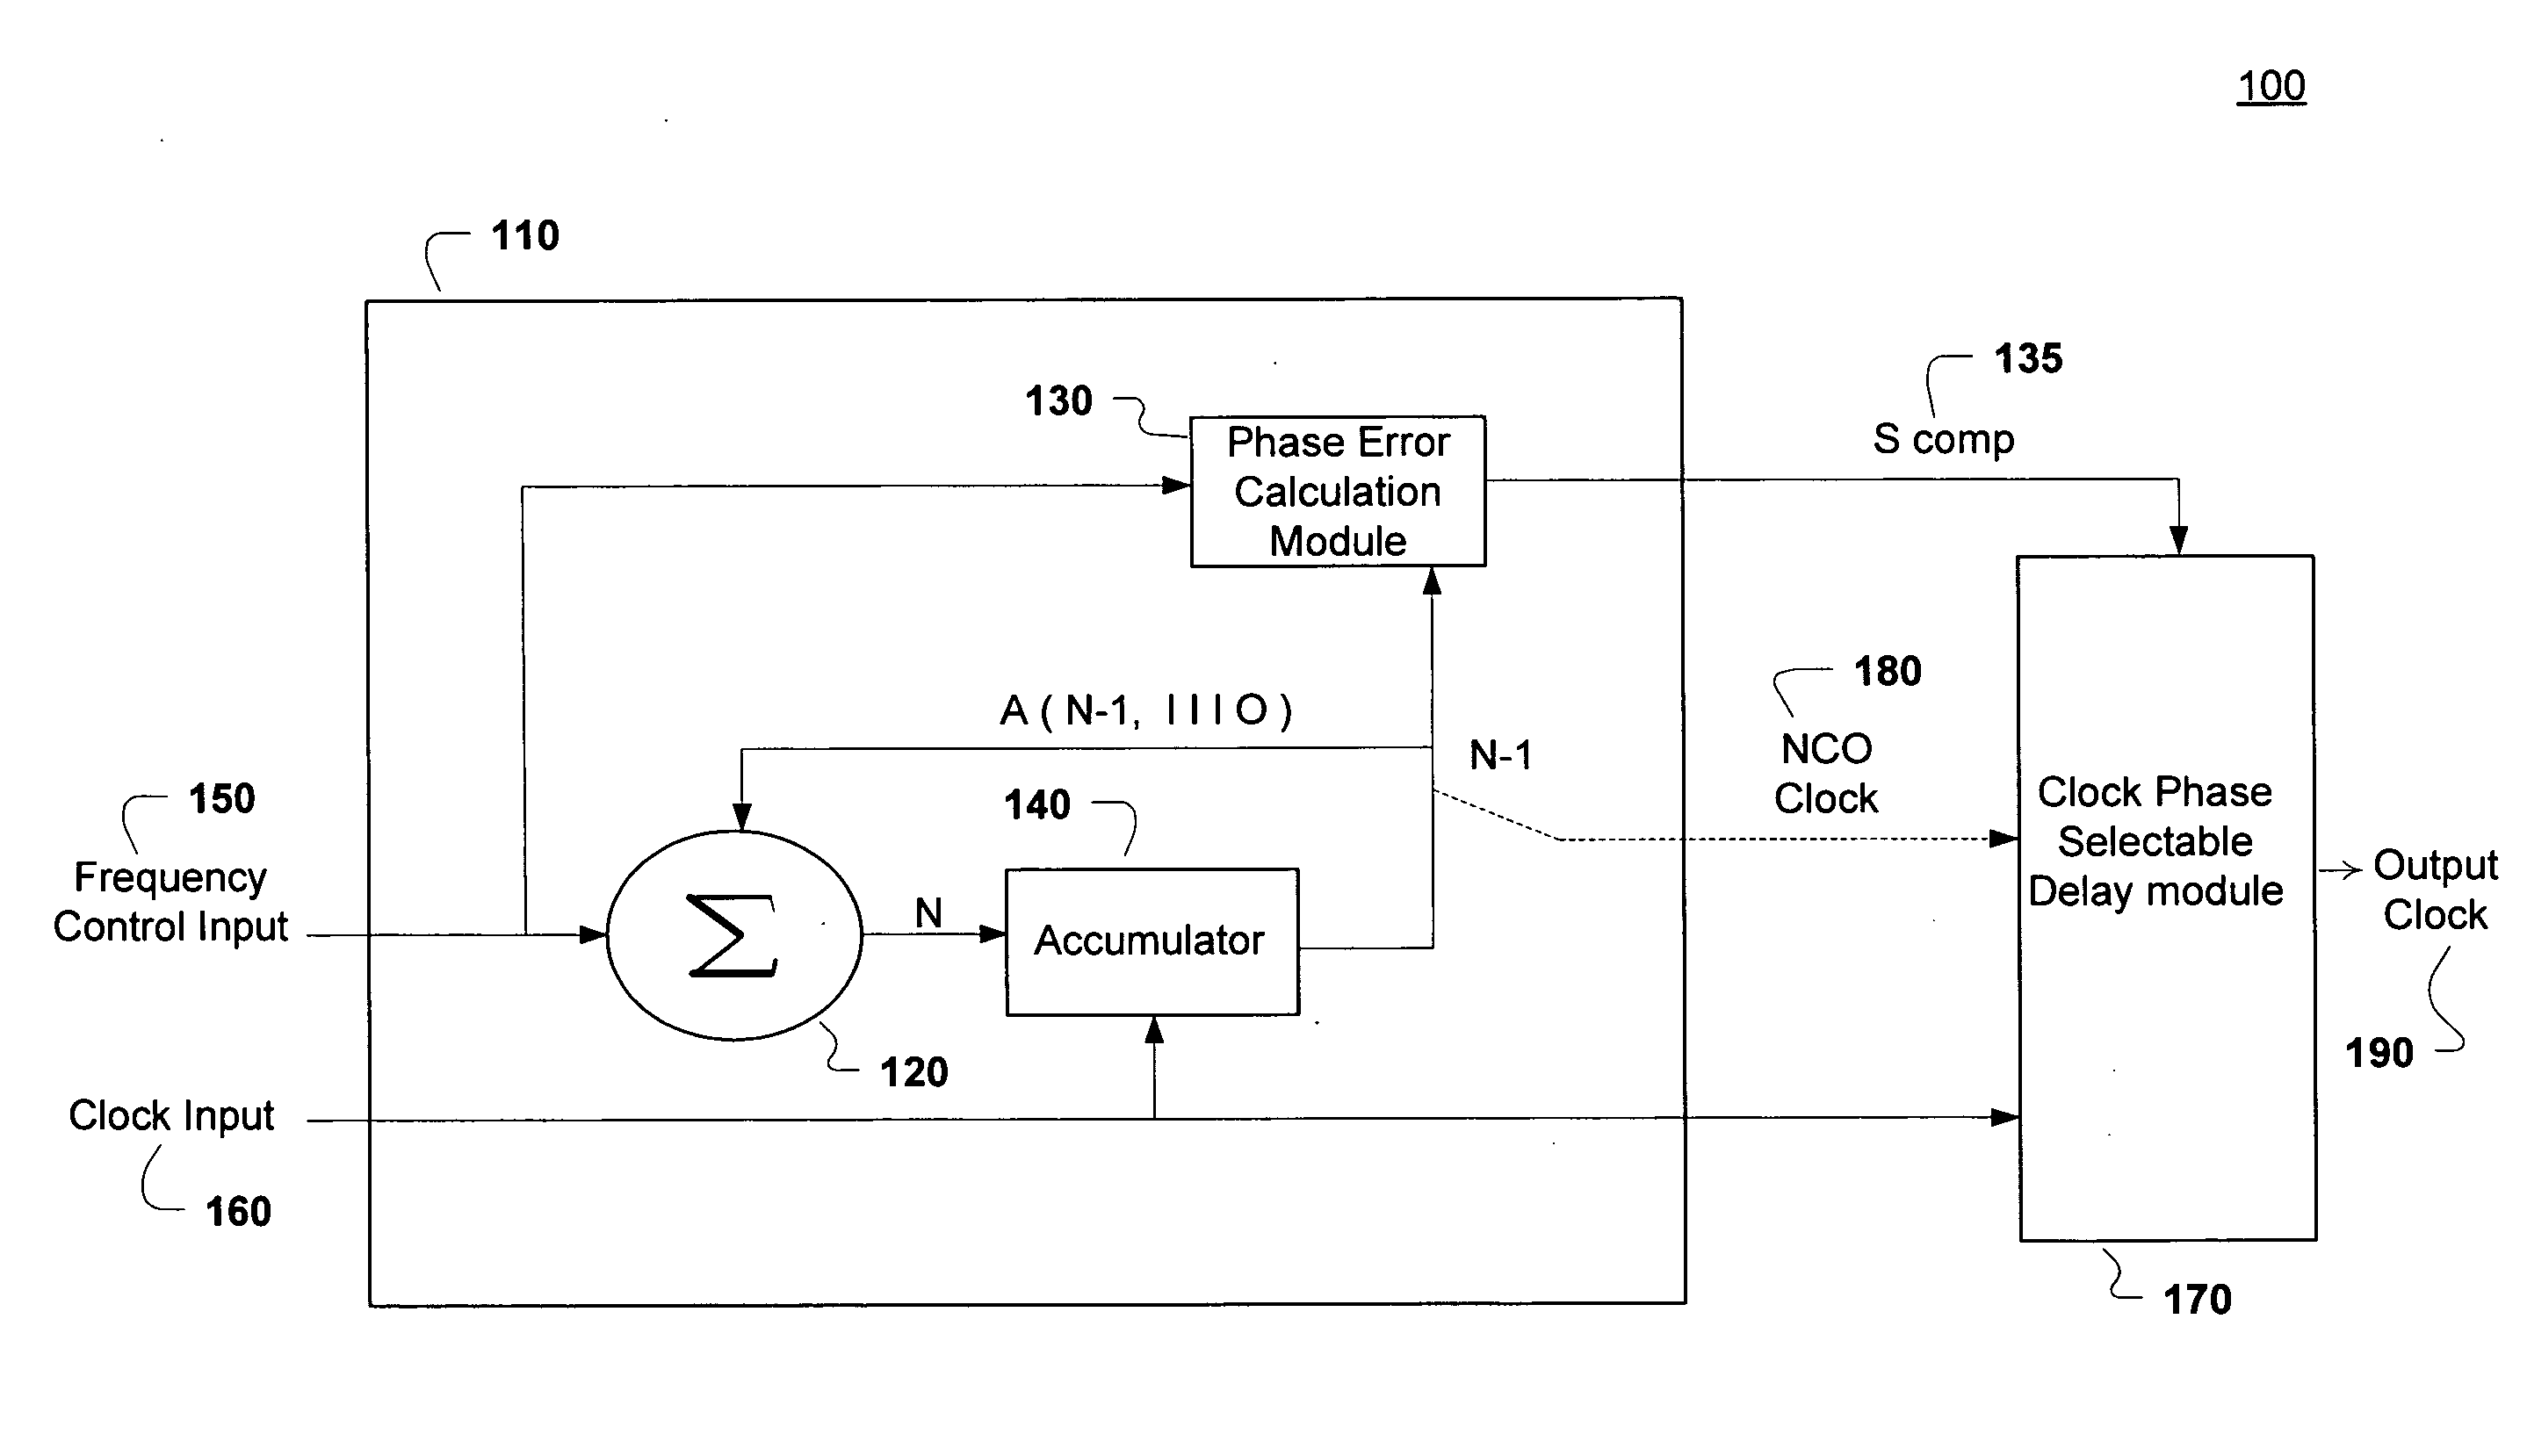 Numerically controlled oscillator (NCO) output clock phase smoothing